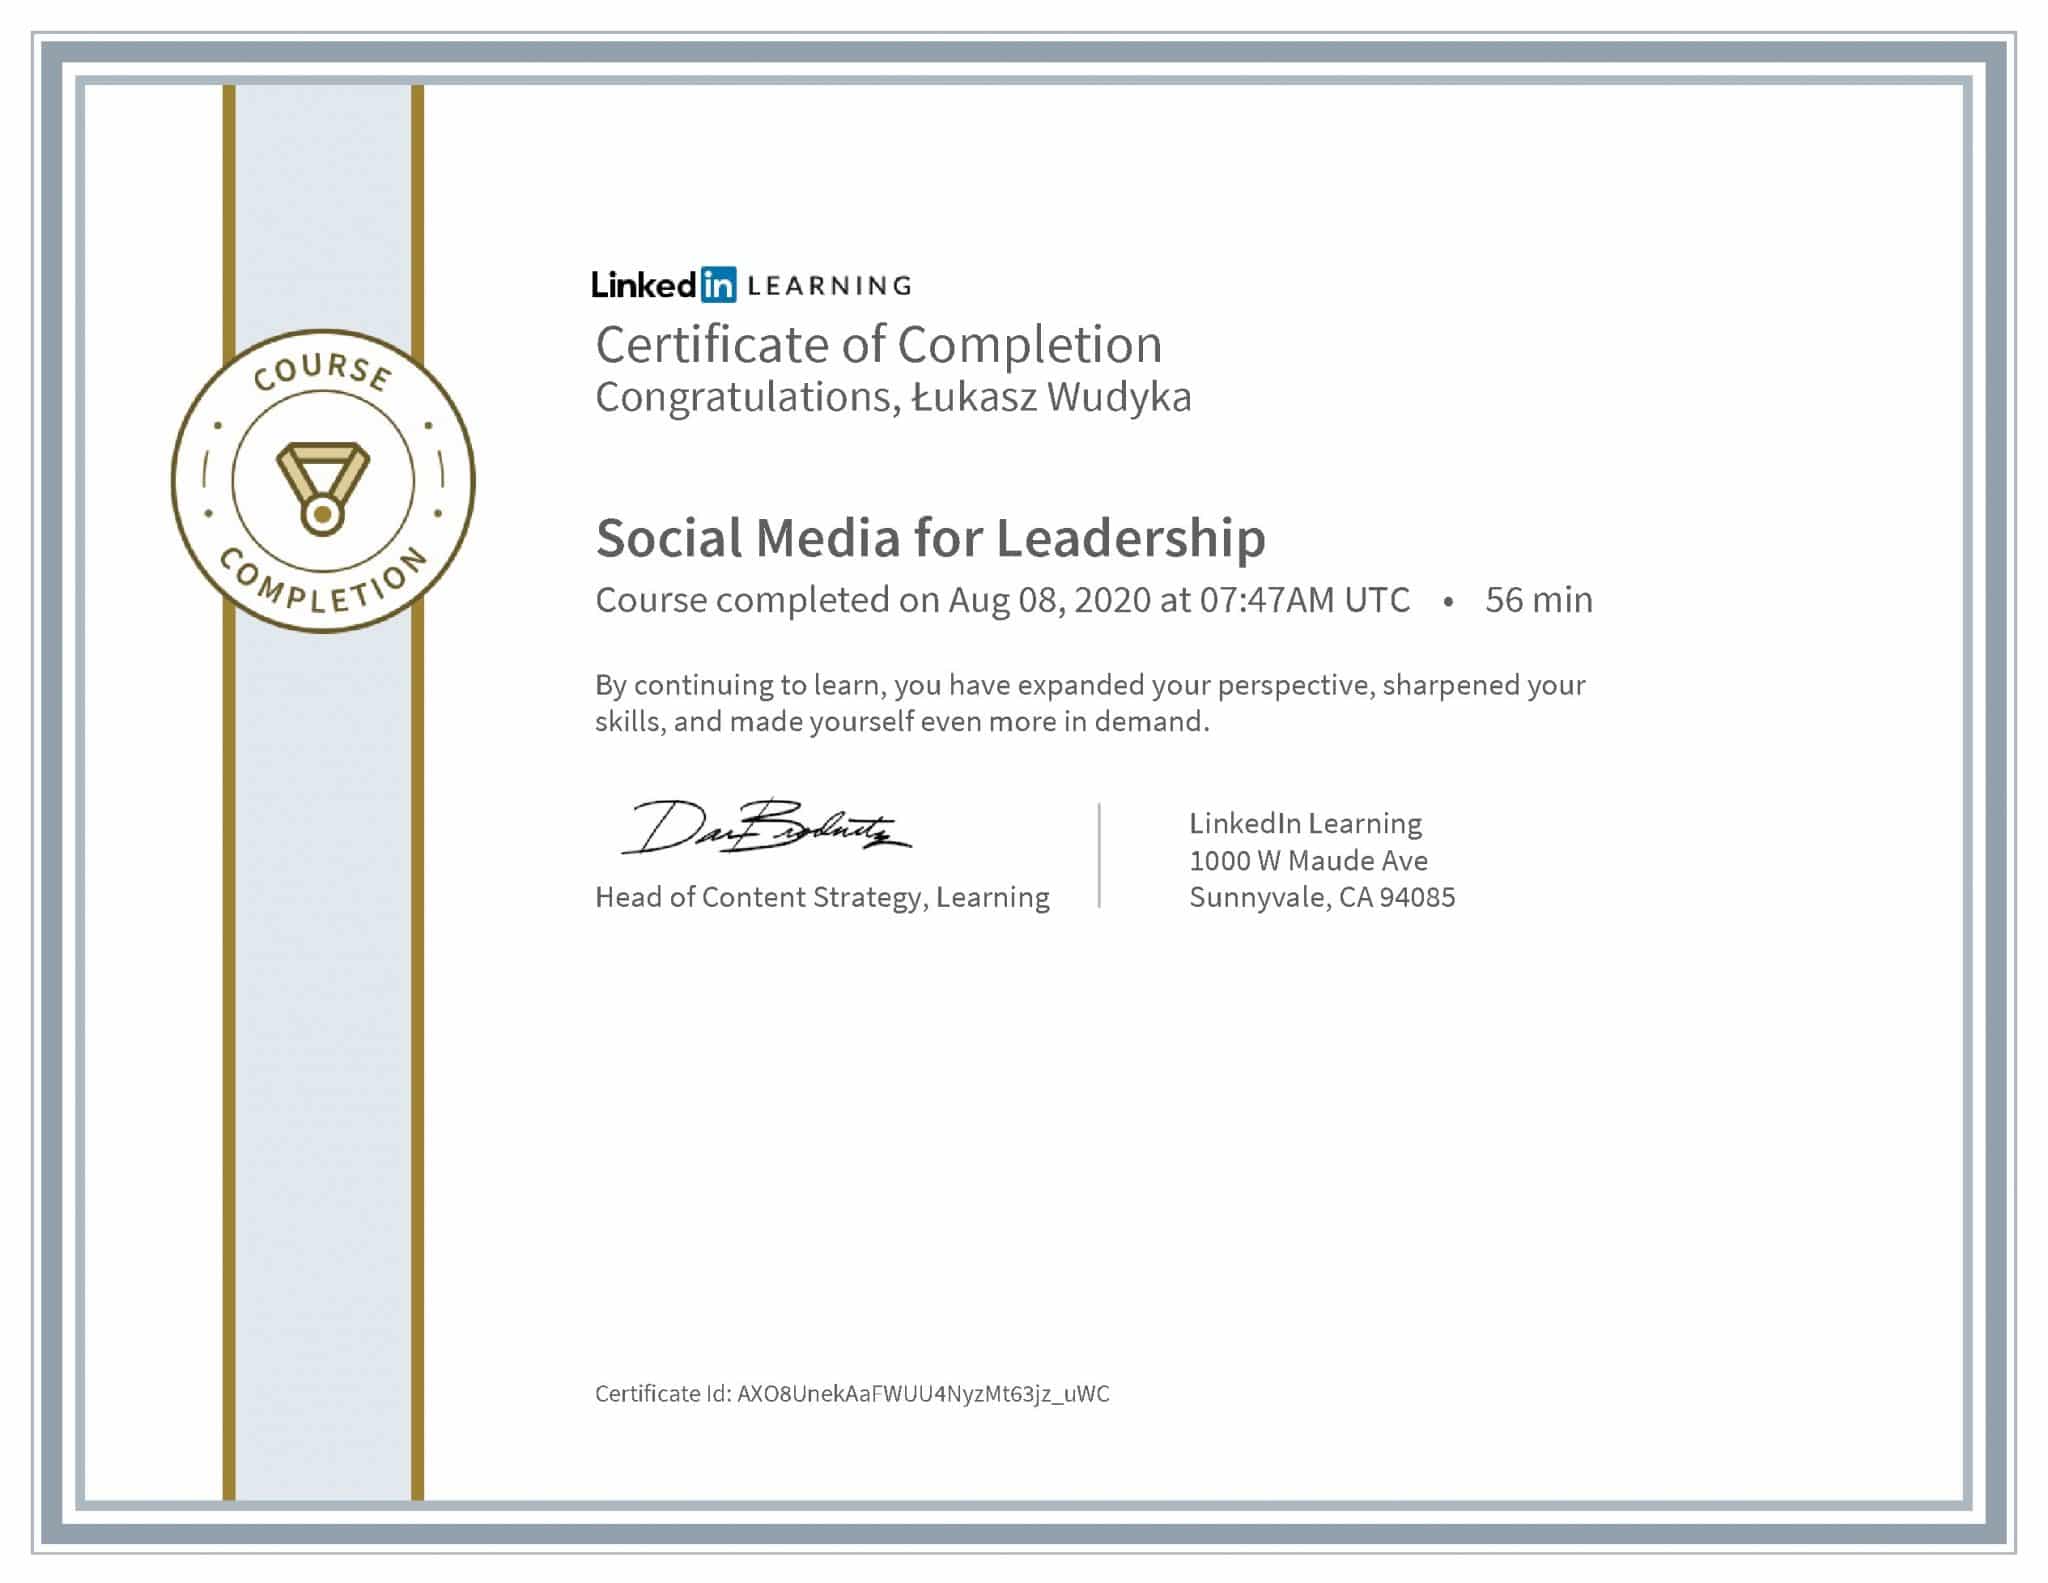 Łukasz Wudyka certyfikat LinkedIn Social Media for Leadership